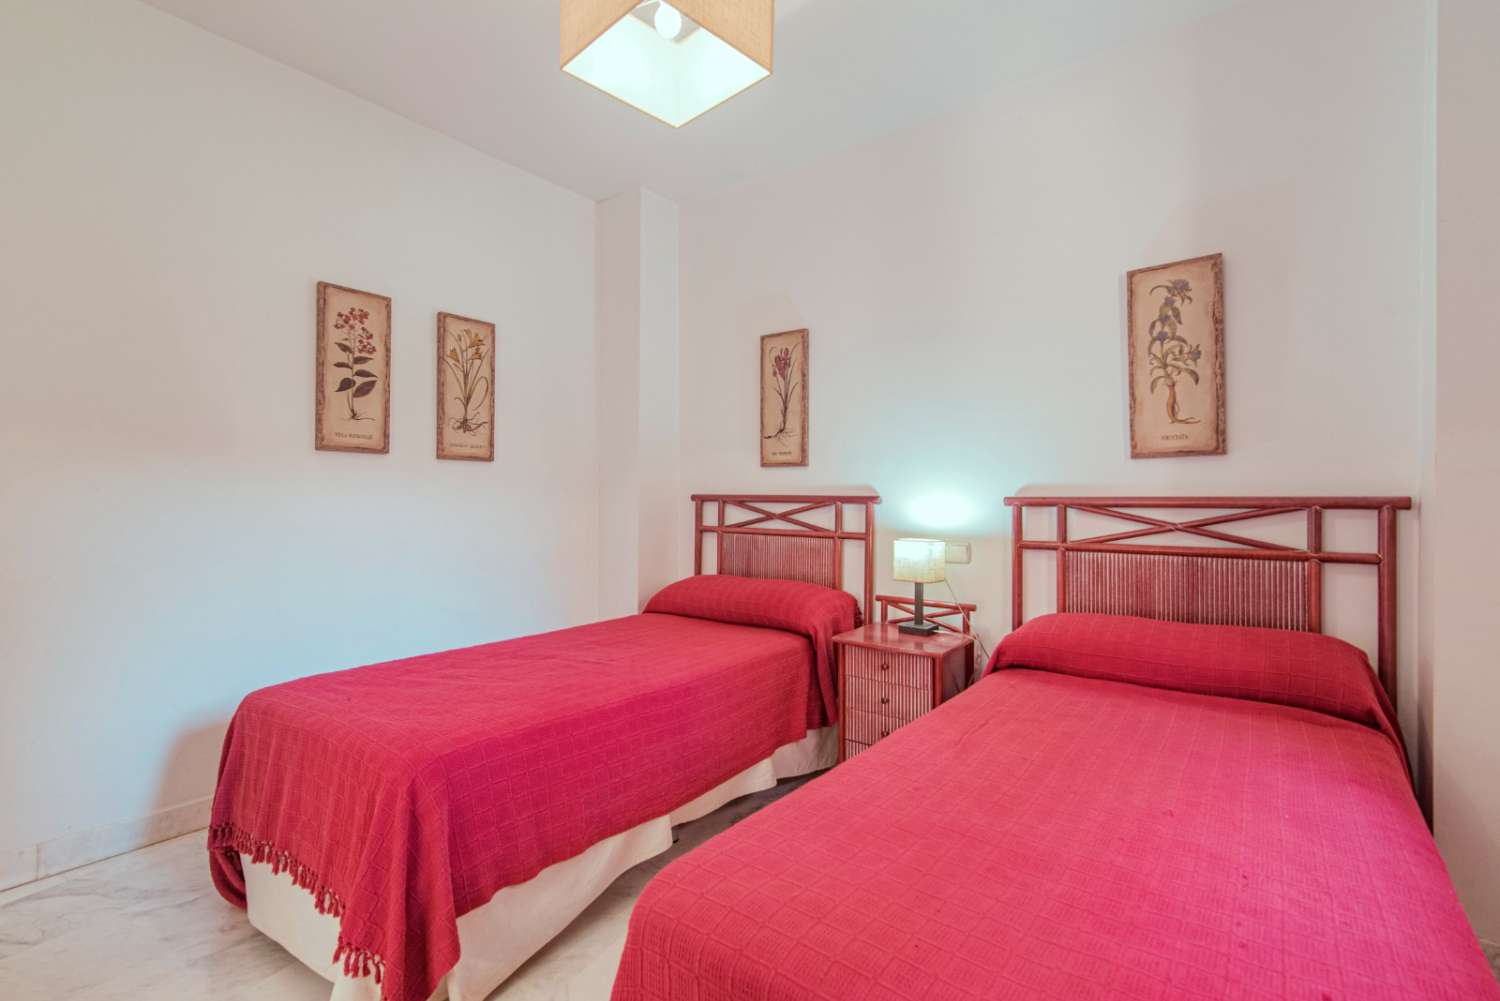 3 bedroom apartment in Playa Granada from September to June